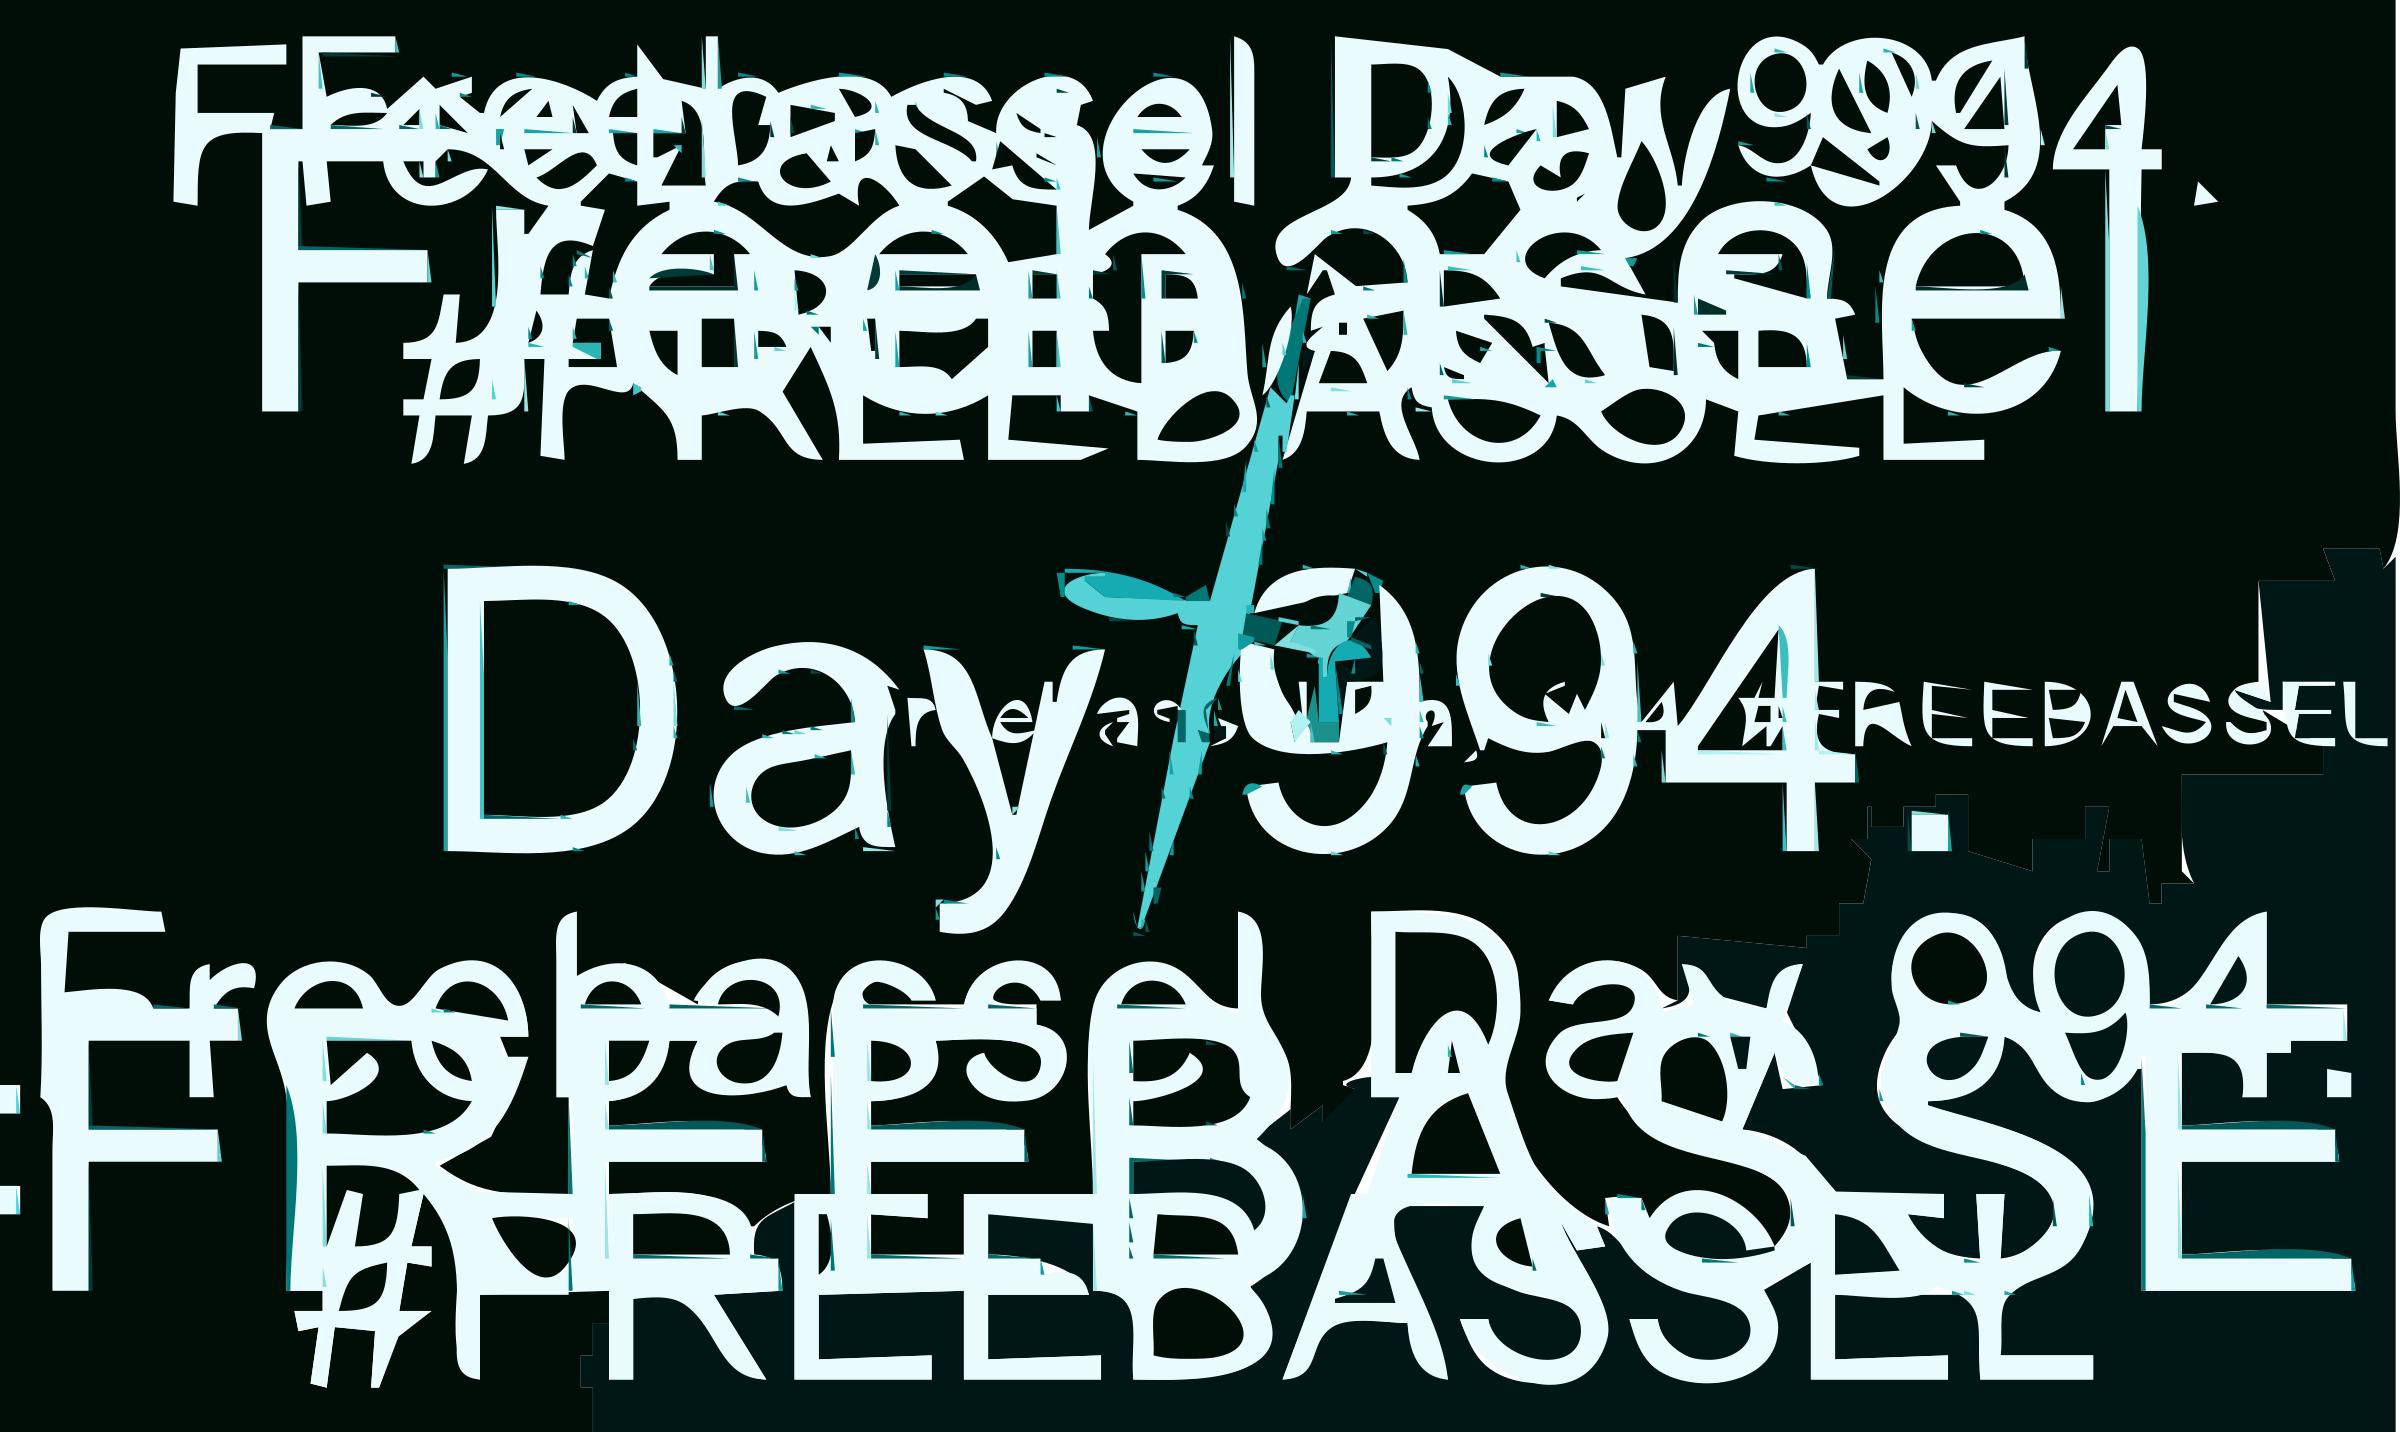 Freebassel Day 994 Drone Cyanotype icons